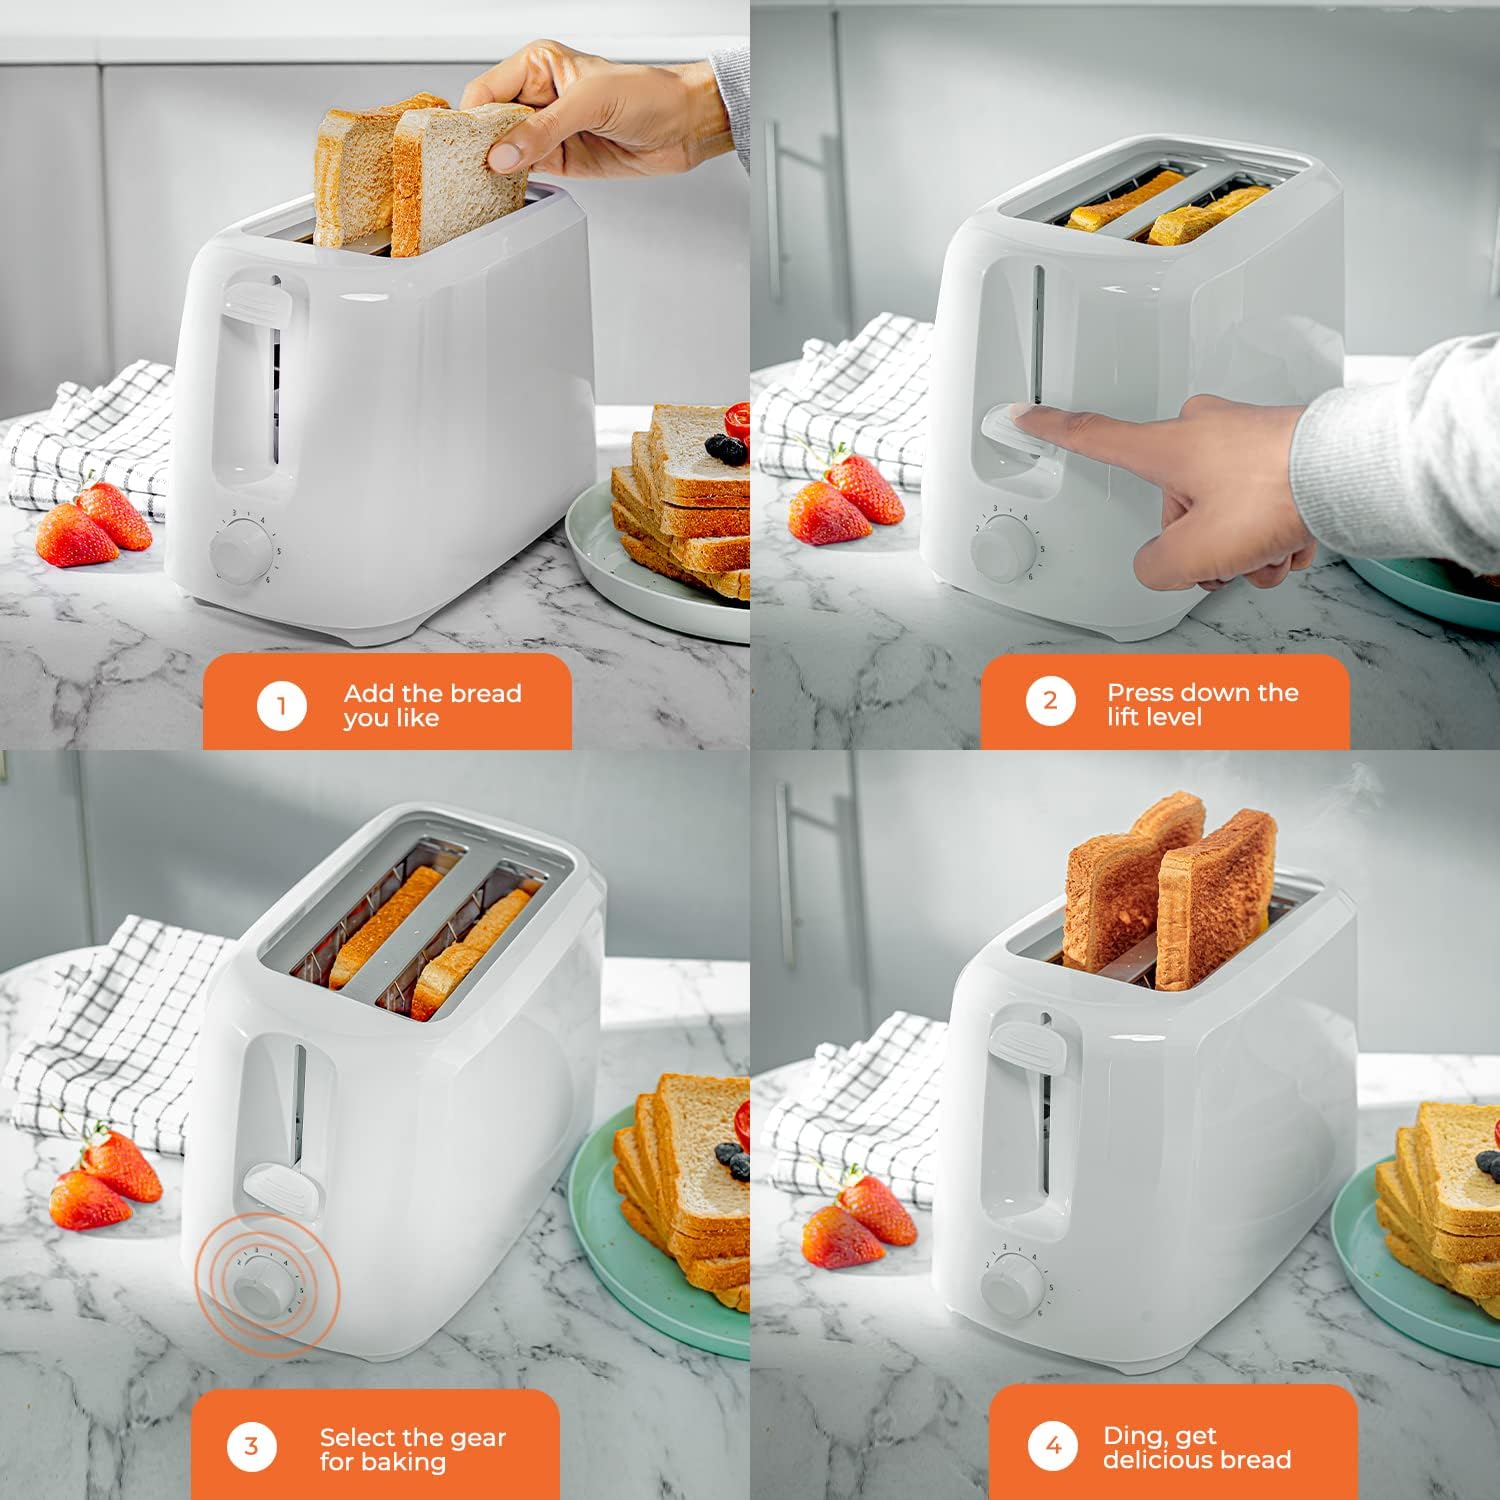 Geepas Bread Toaster, White, Gbt36515